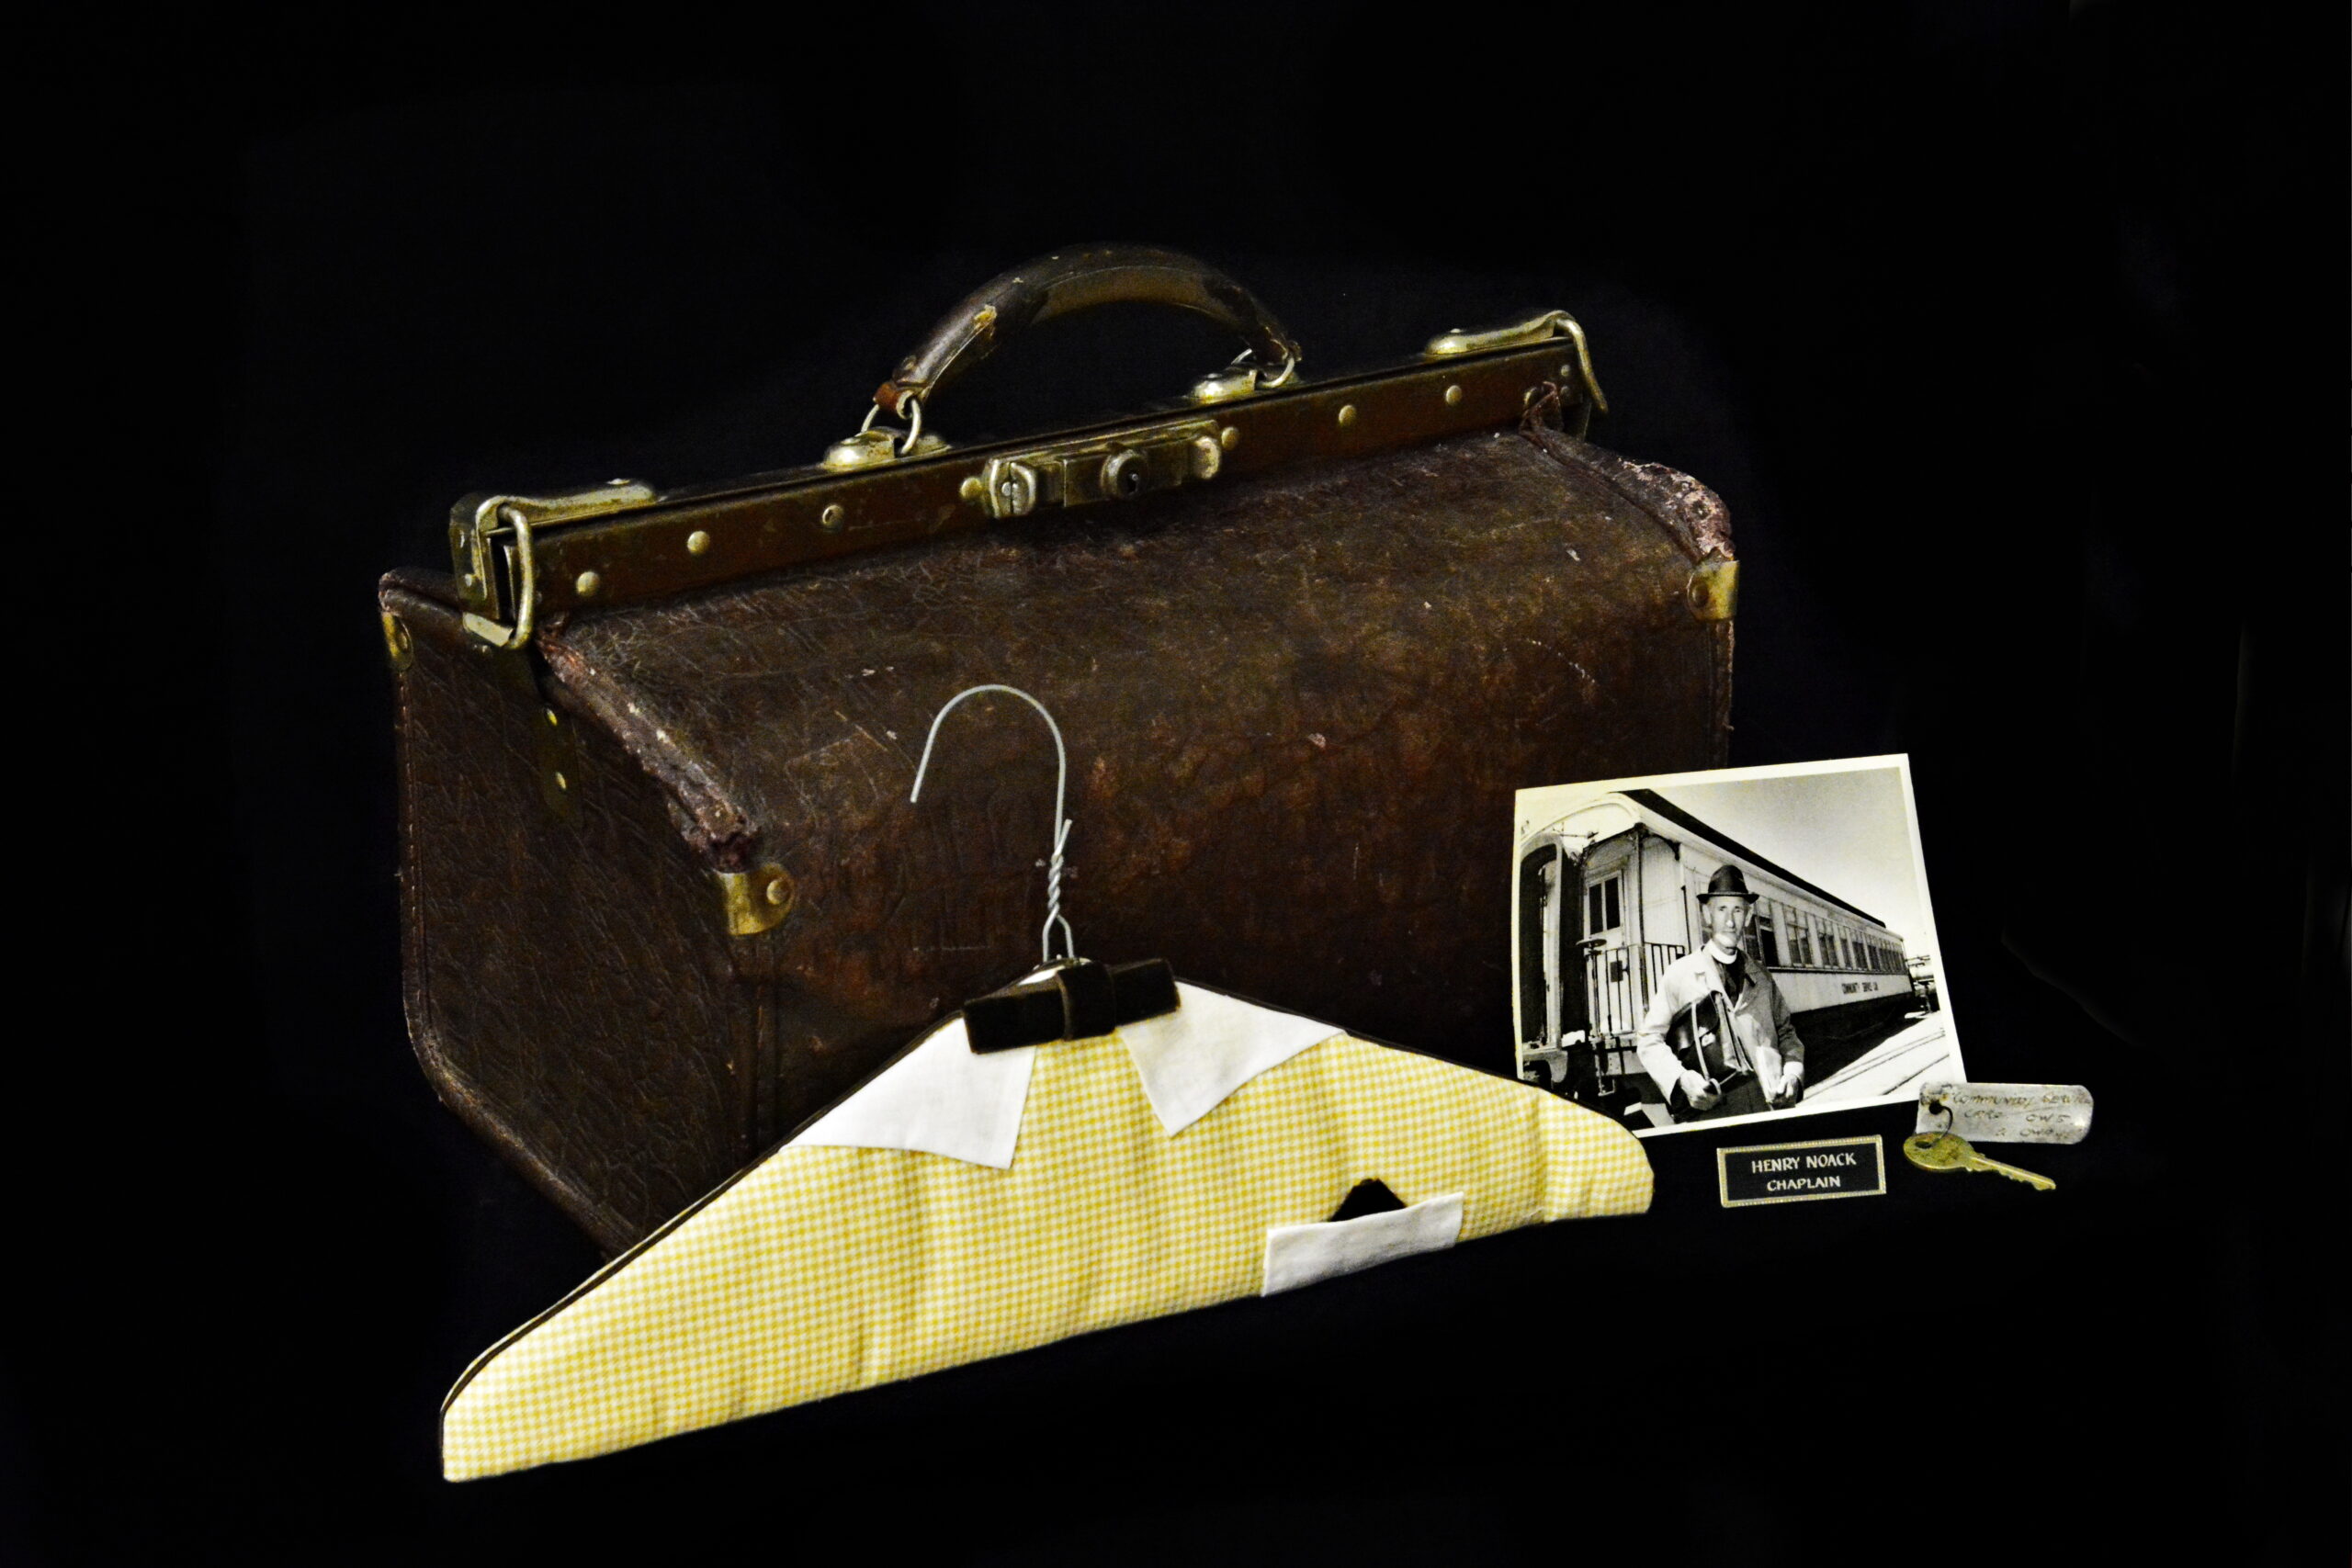 Items belonging for Henry Noack, travelling chaplain, Item## 7044 & 15351